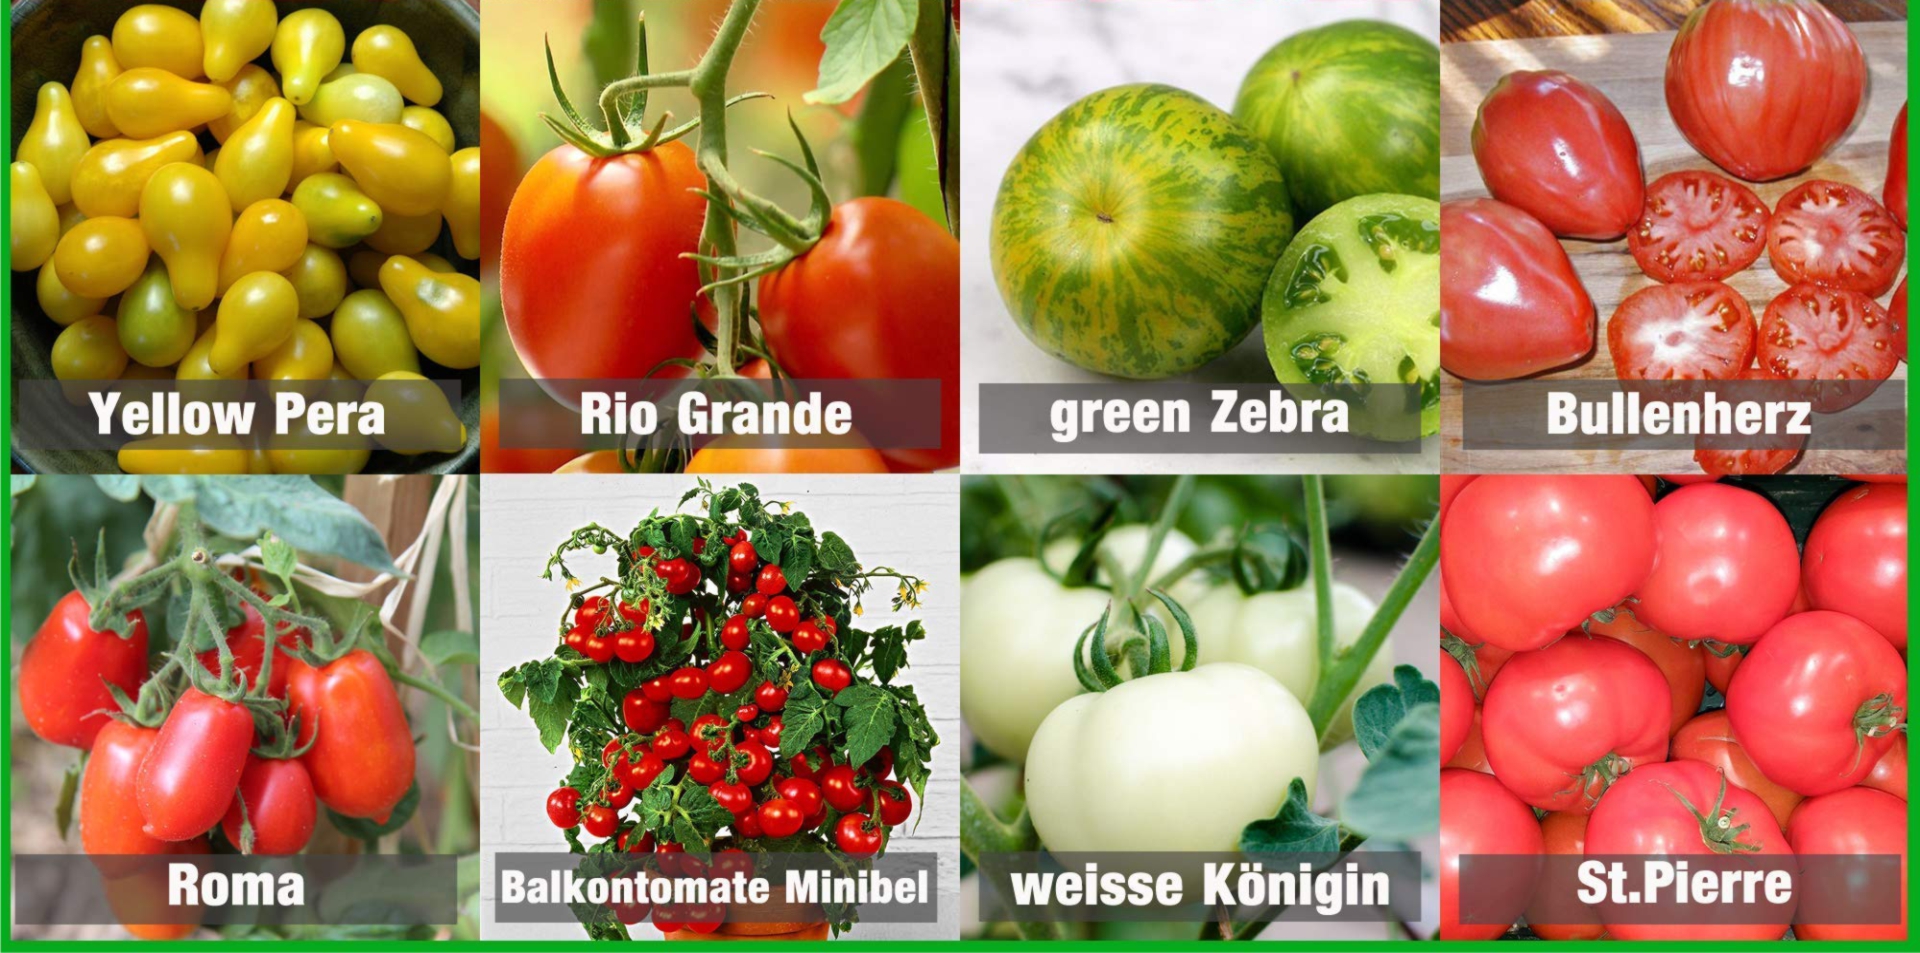 семян томатов и овощей